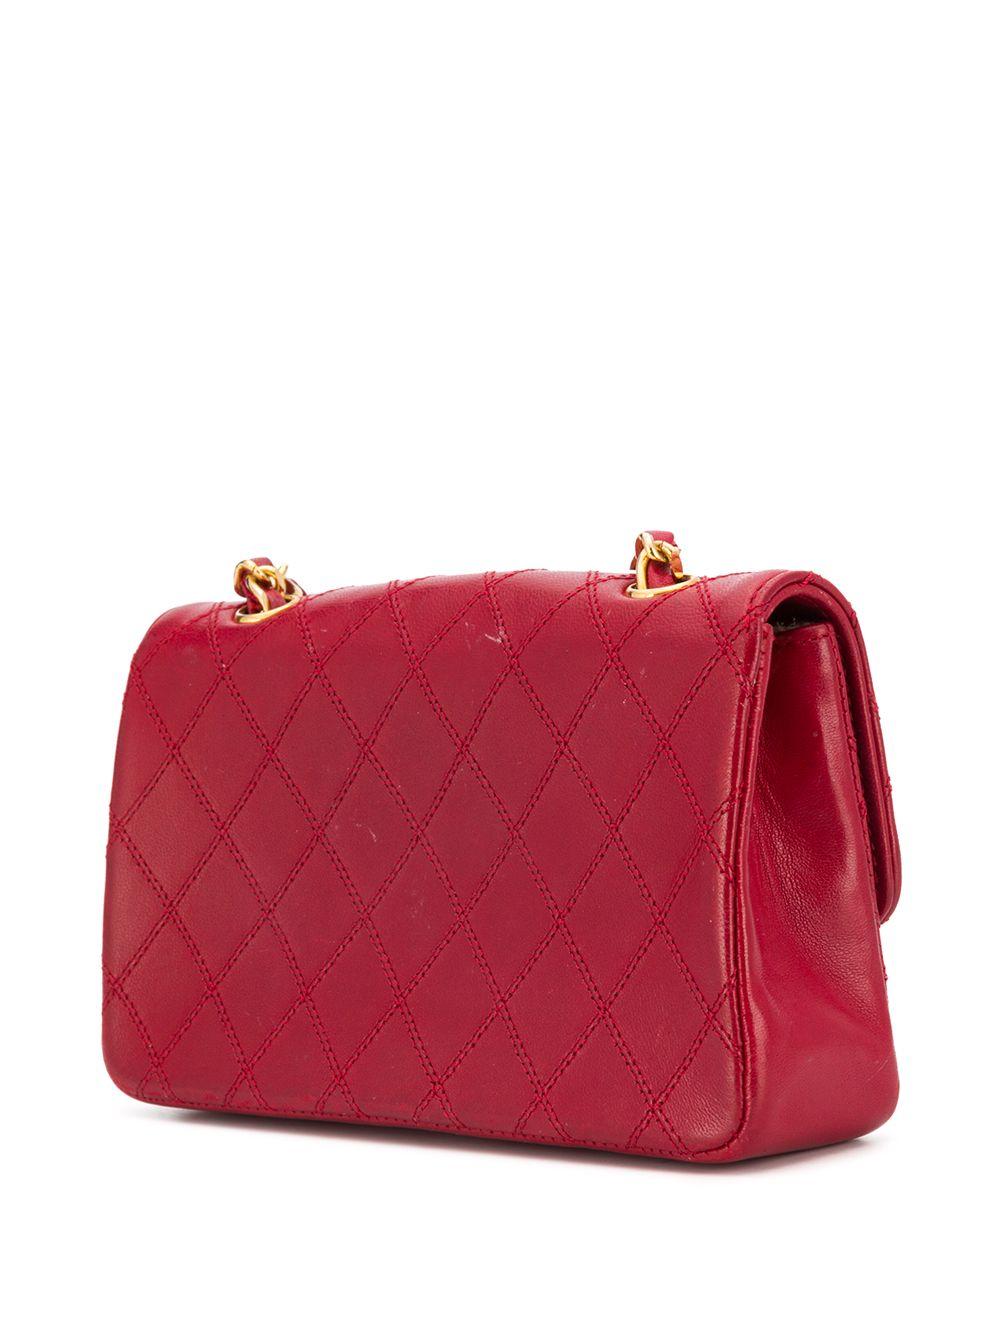 Women's Chanel Red Leather CC Shoulder Bag